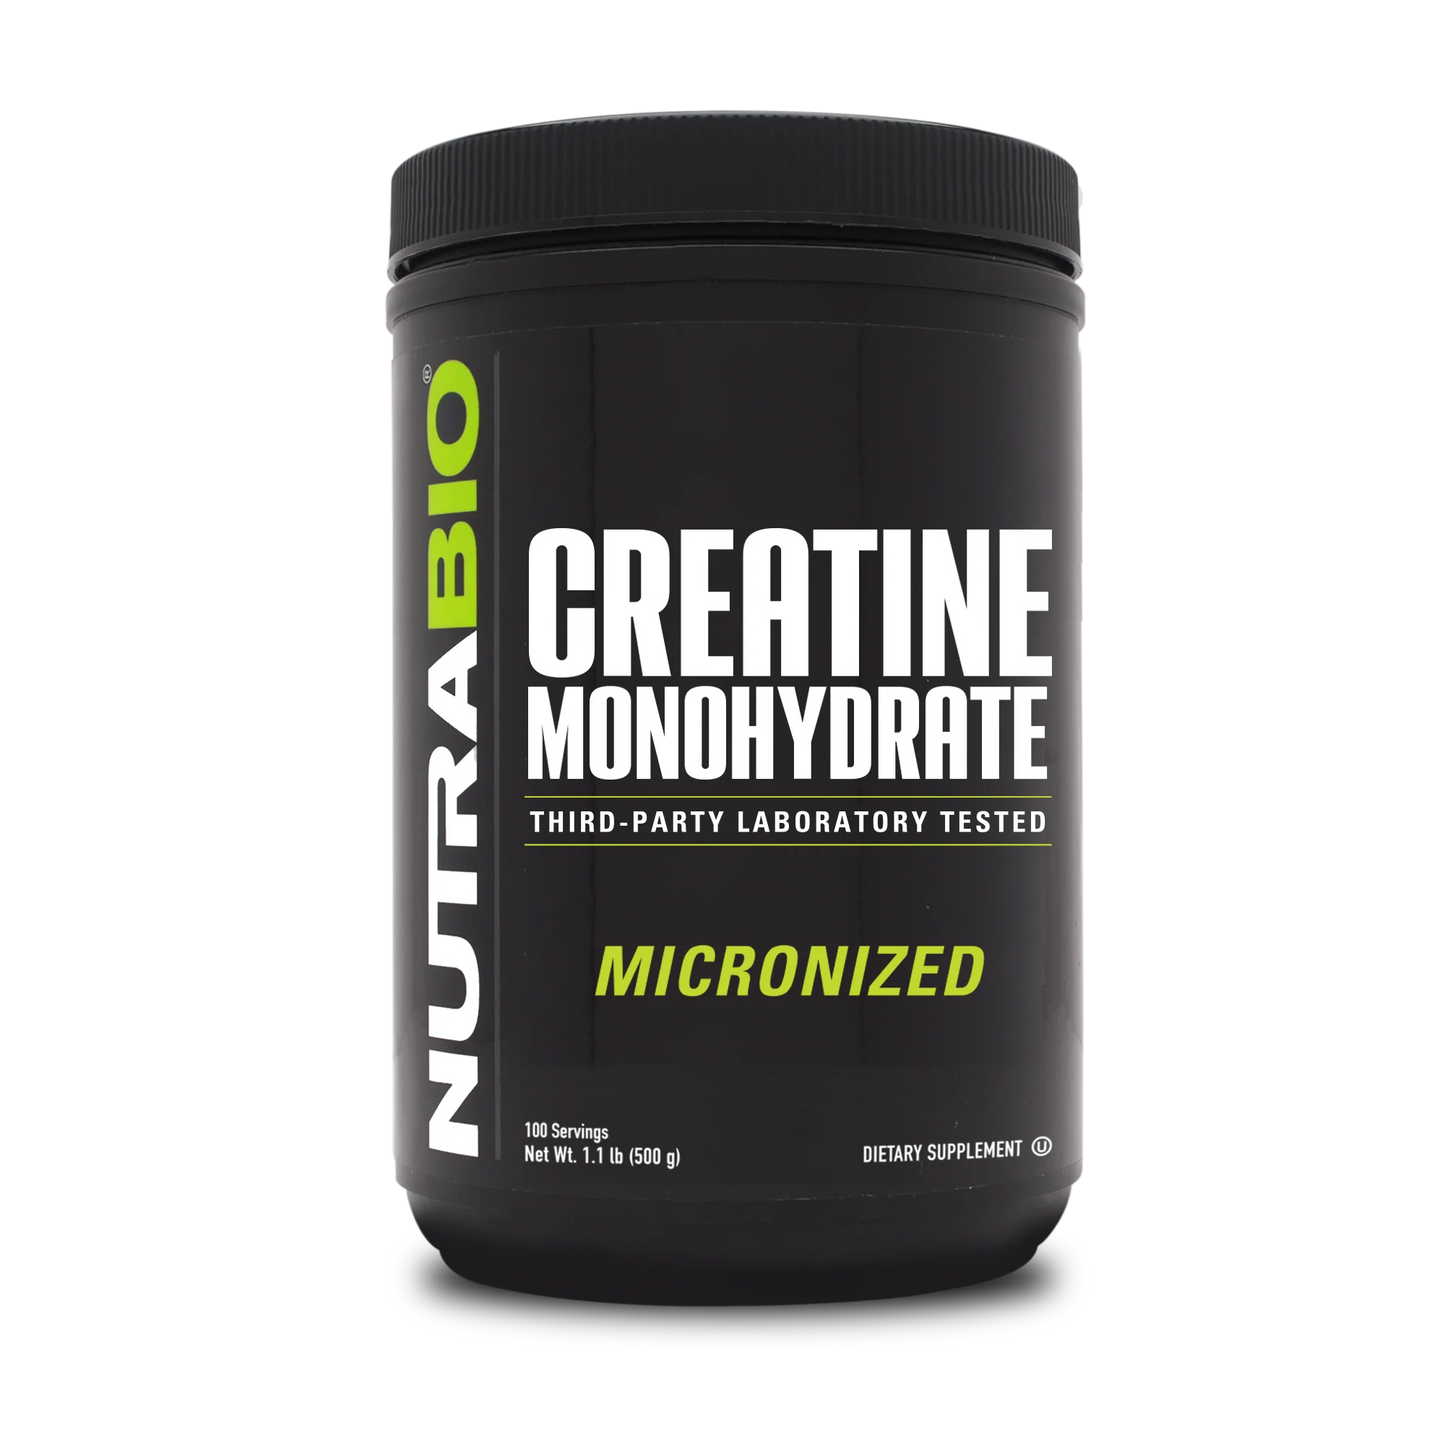 Creatine Monohydrate by Nutrabio